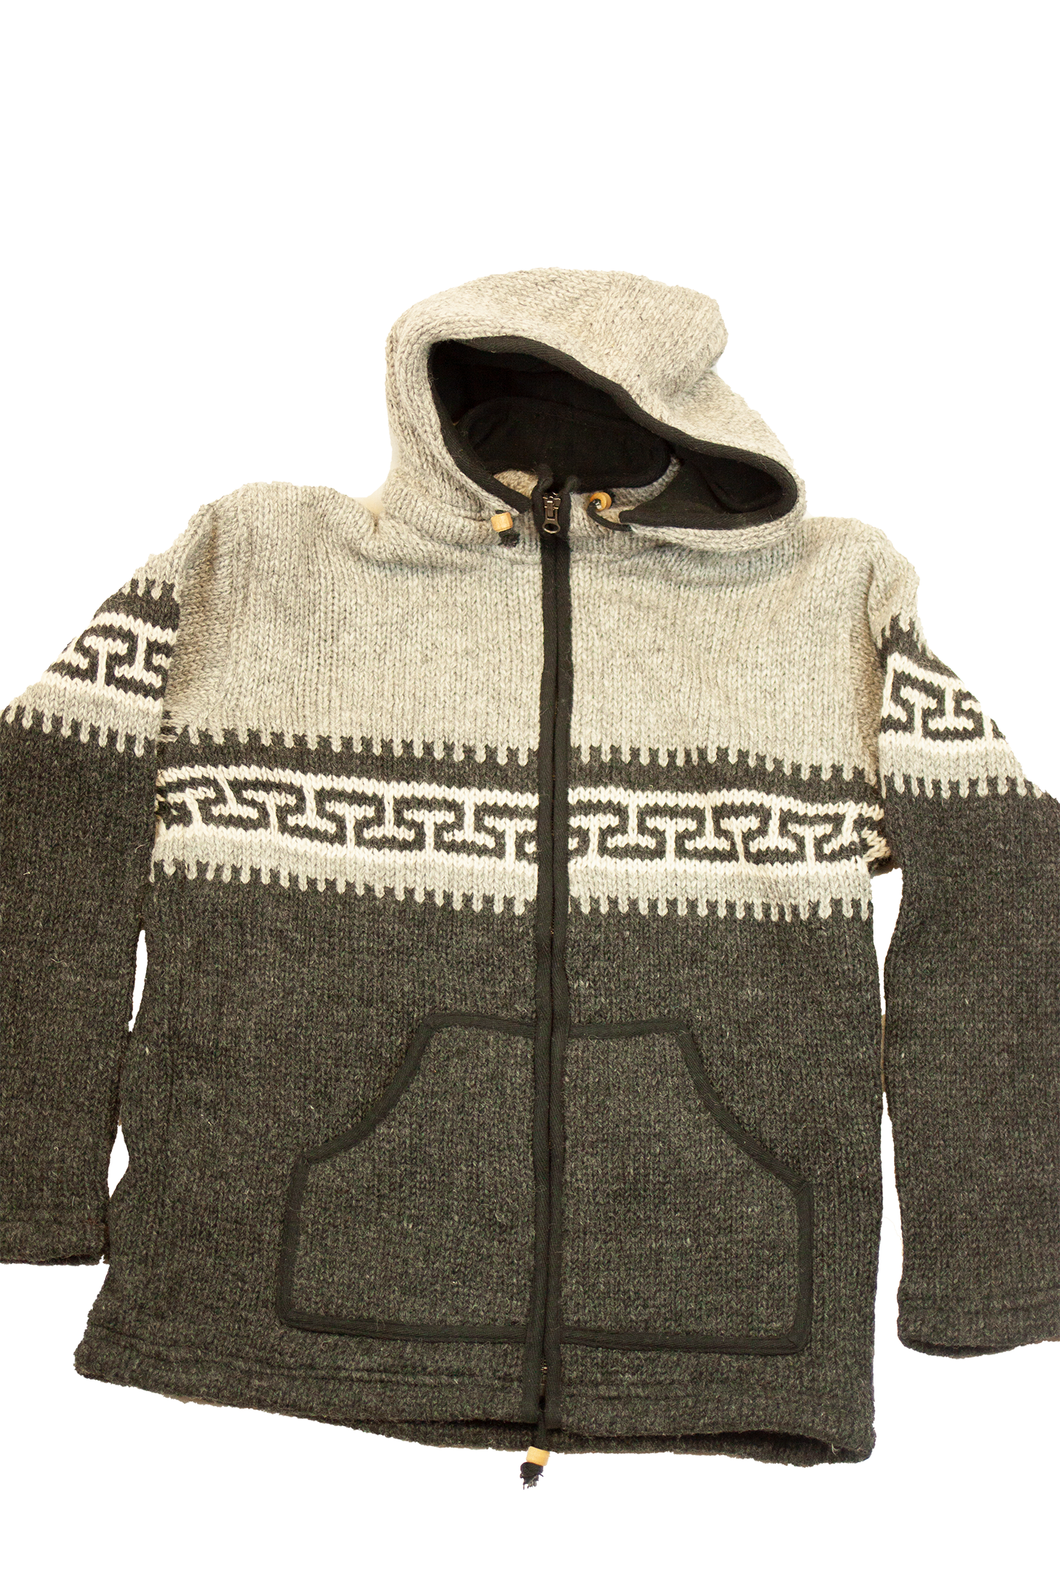 Hand knitted woolen jacket/sweater with soft inner fleece - HMPWJ2